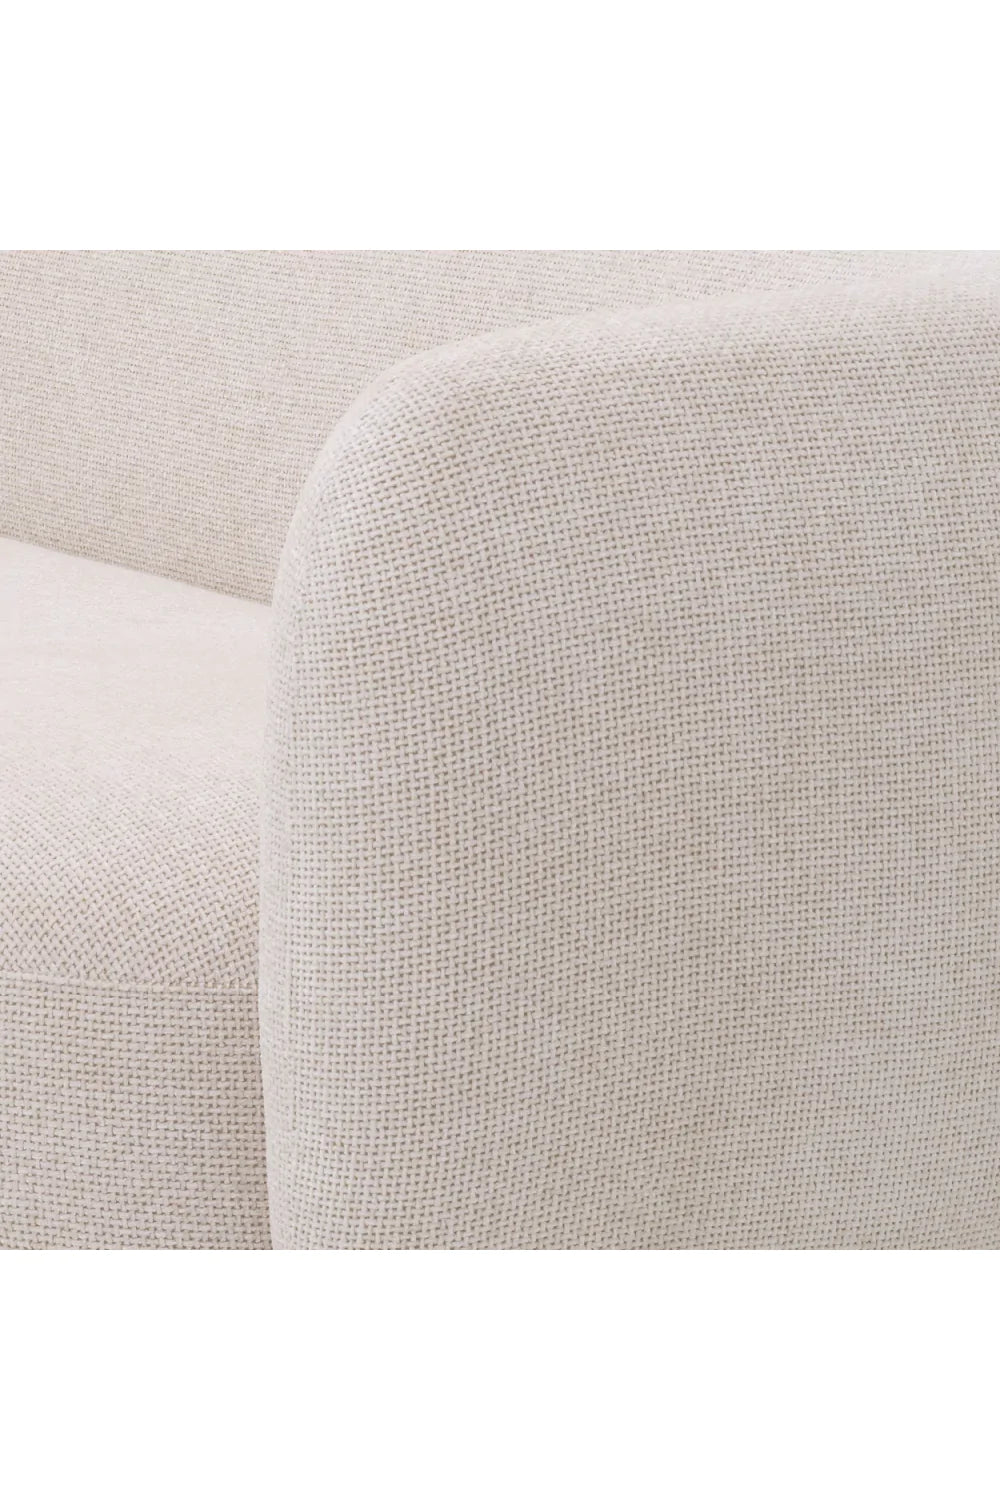 White Curved Sofa | Eichholtz Roxy | Oroa.com